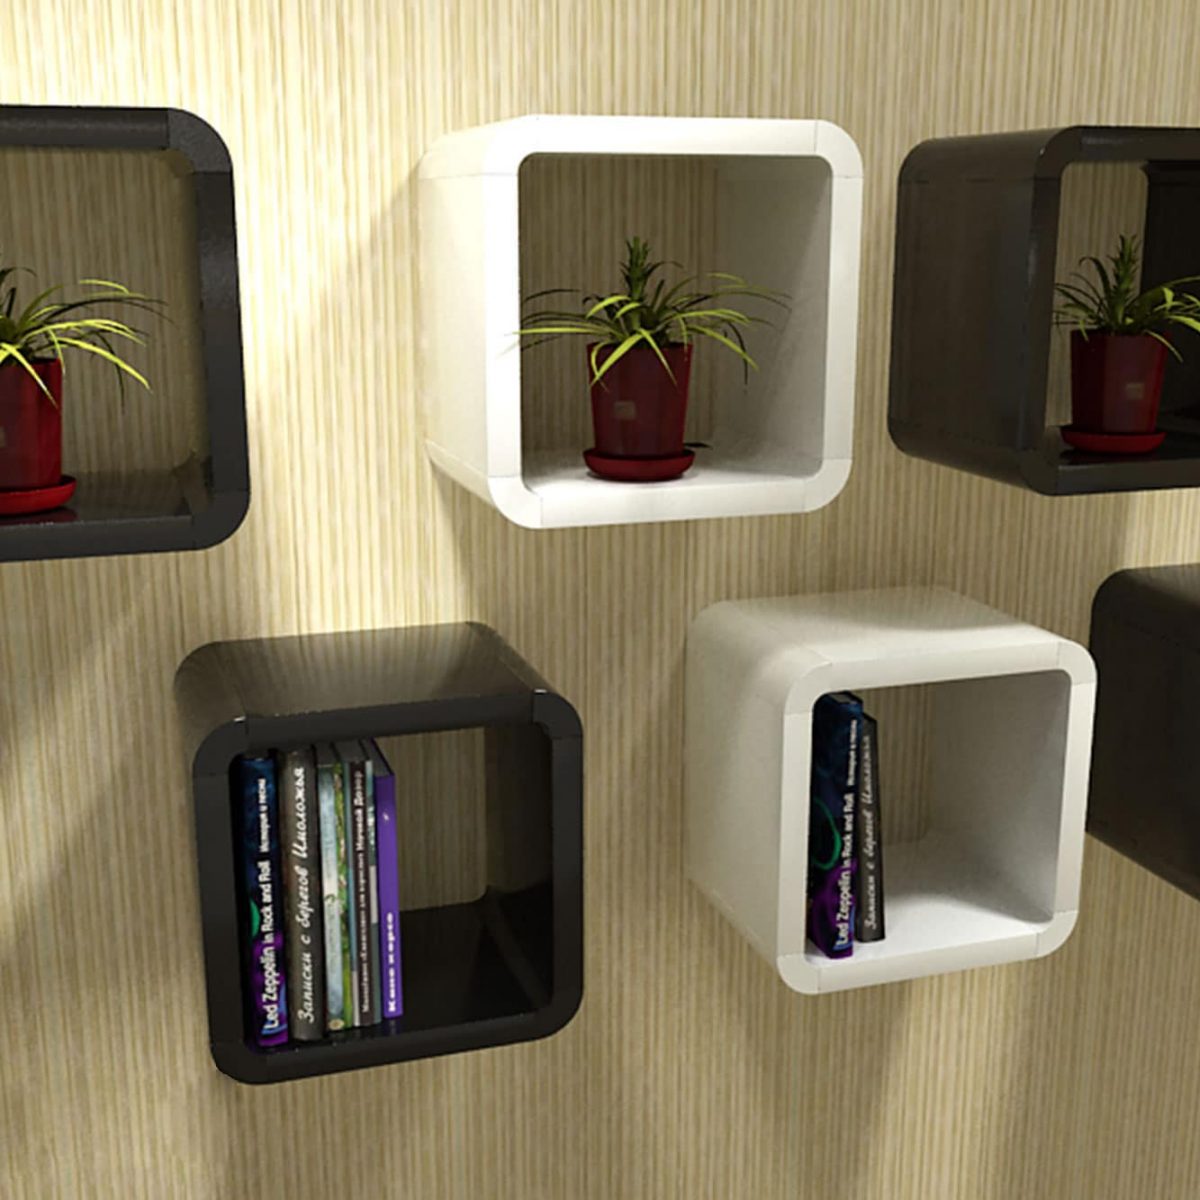 cube wall shelf